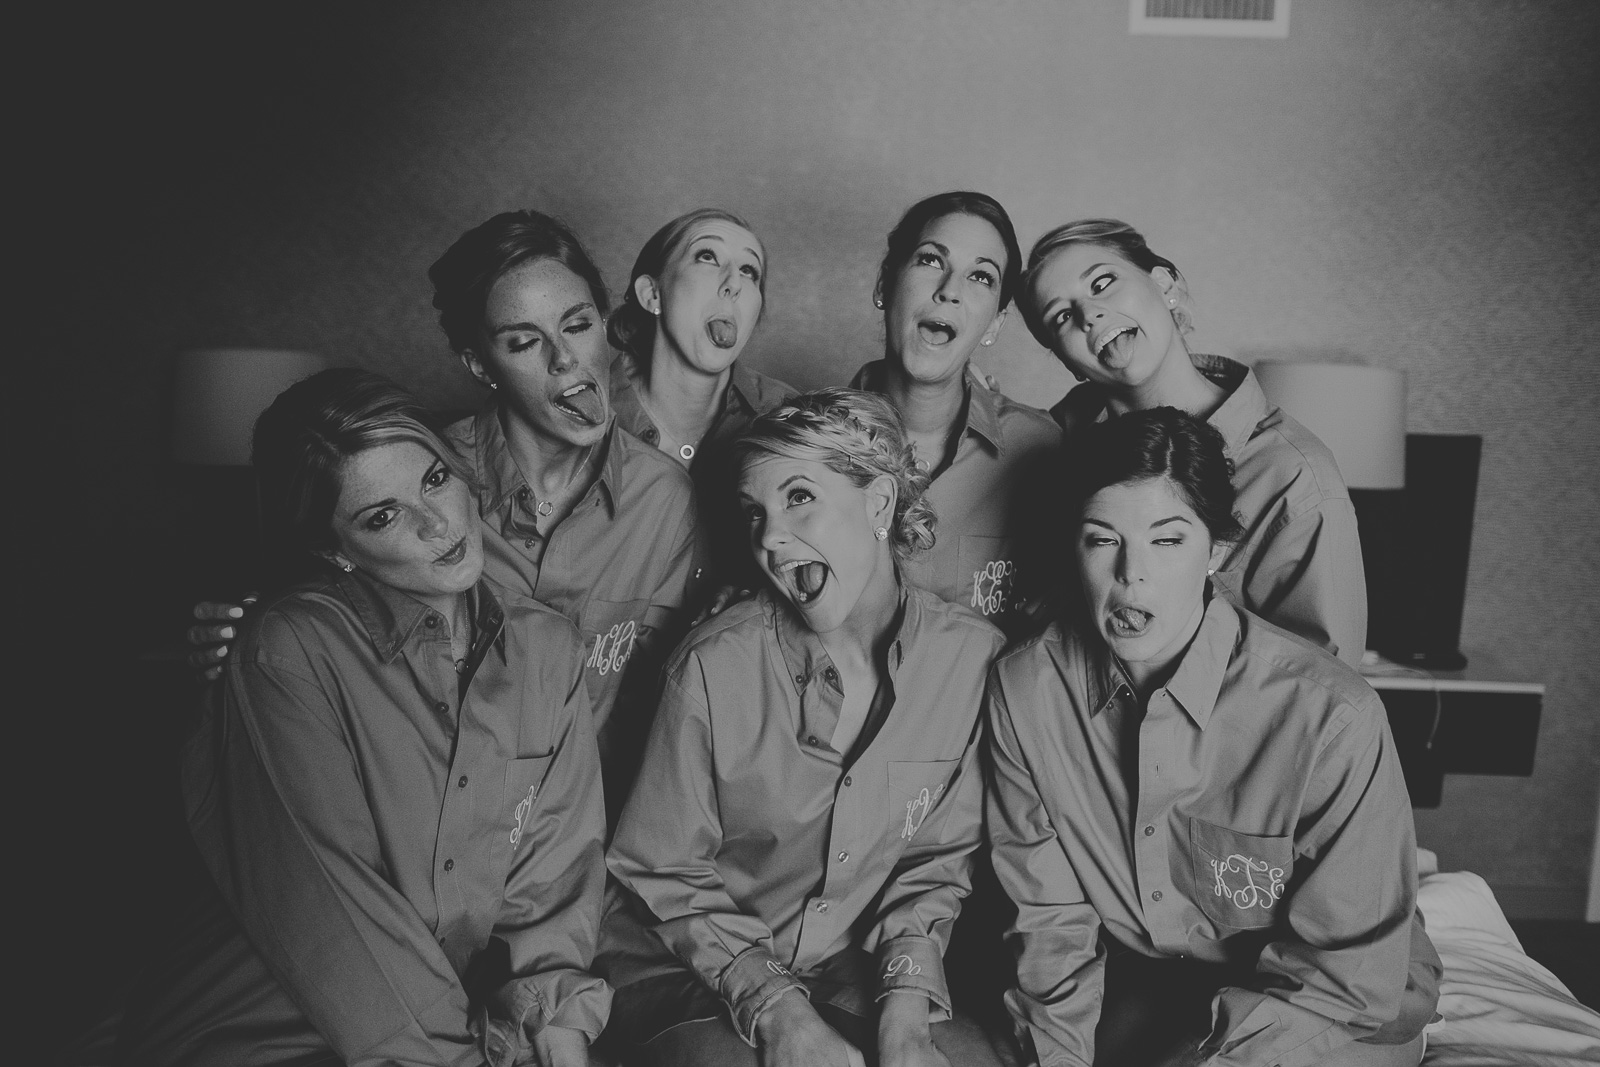 12 bridesmaids being goofy